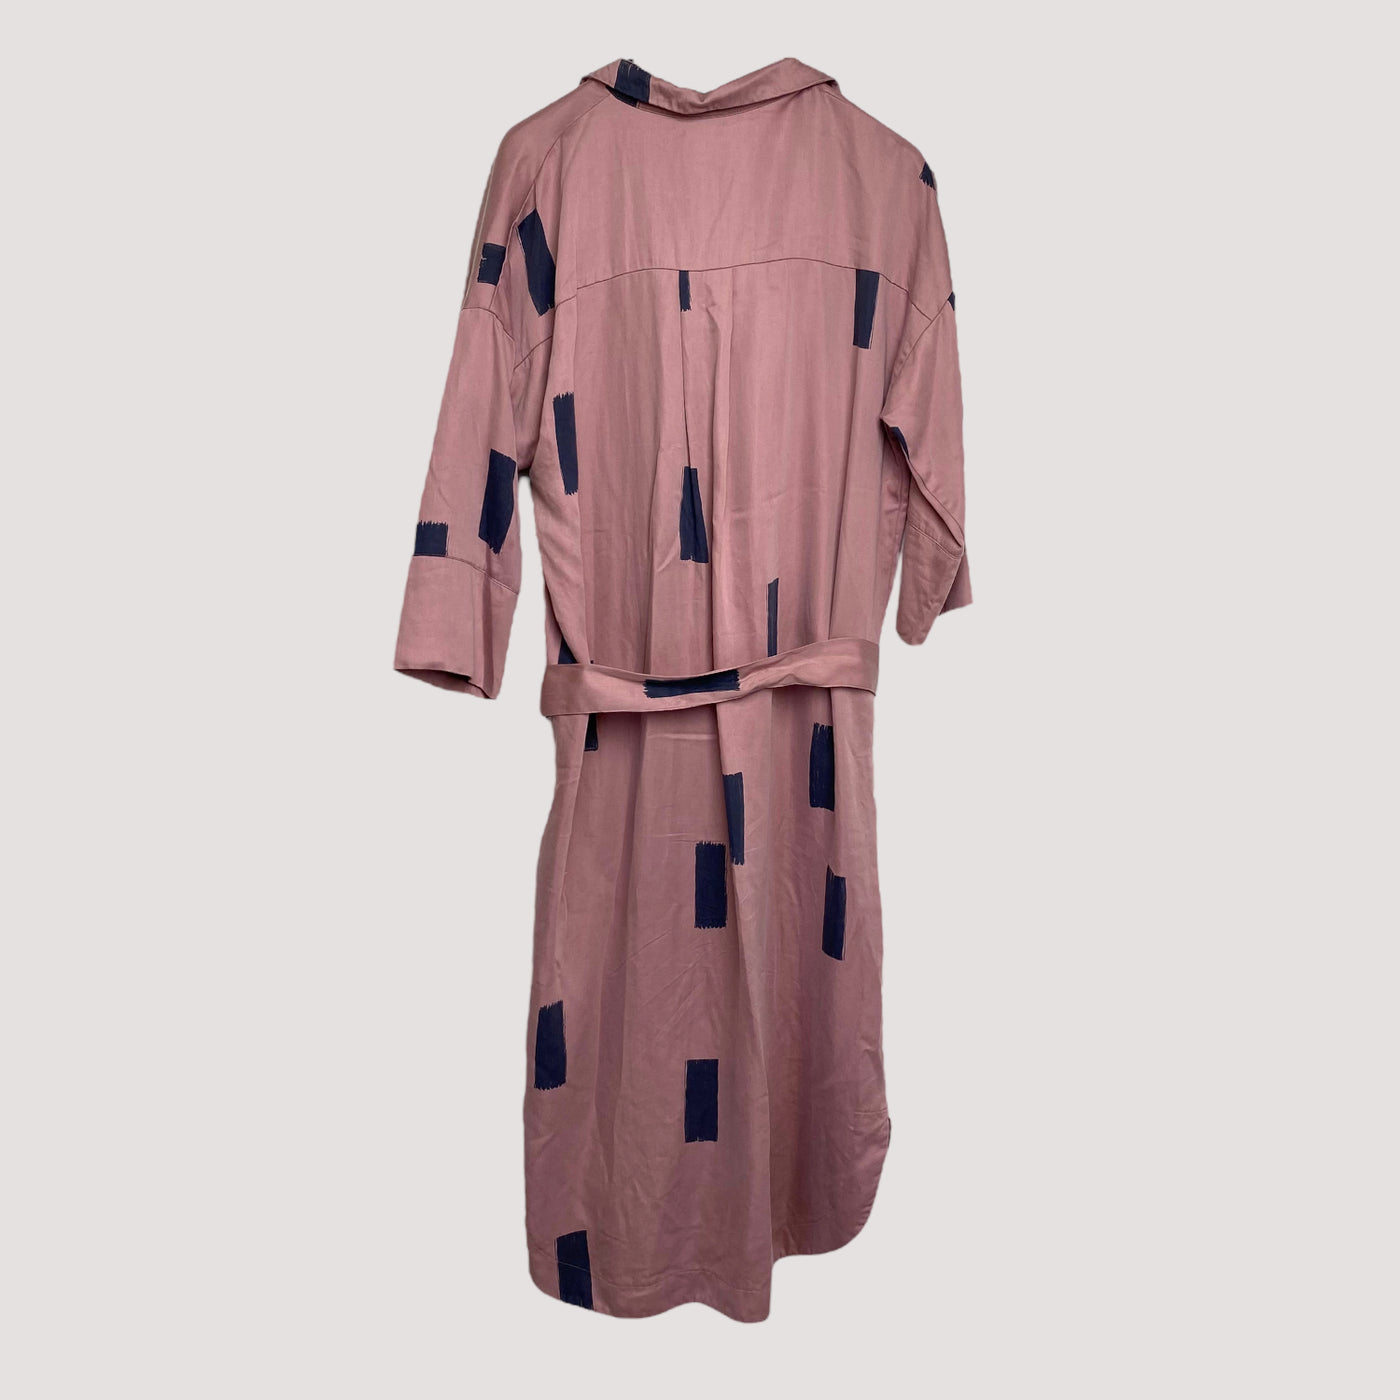 Papu classic shirt dress, salmon pink | women S